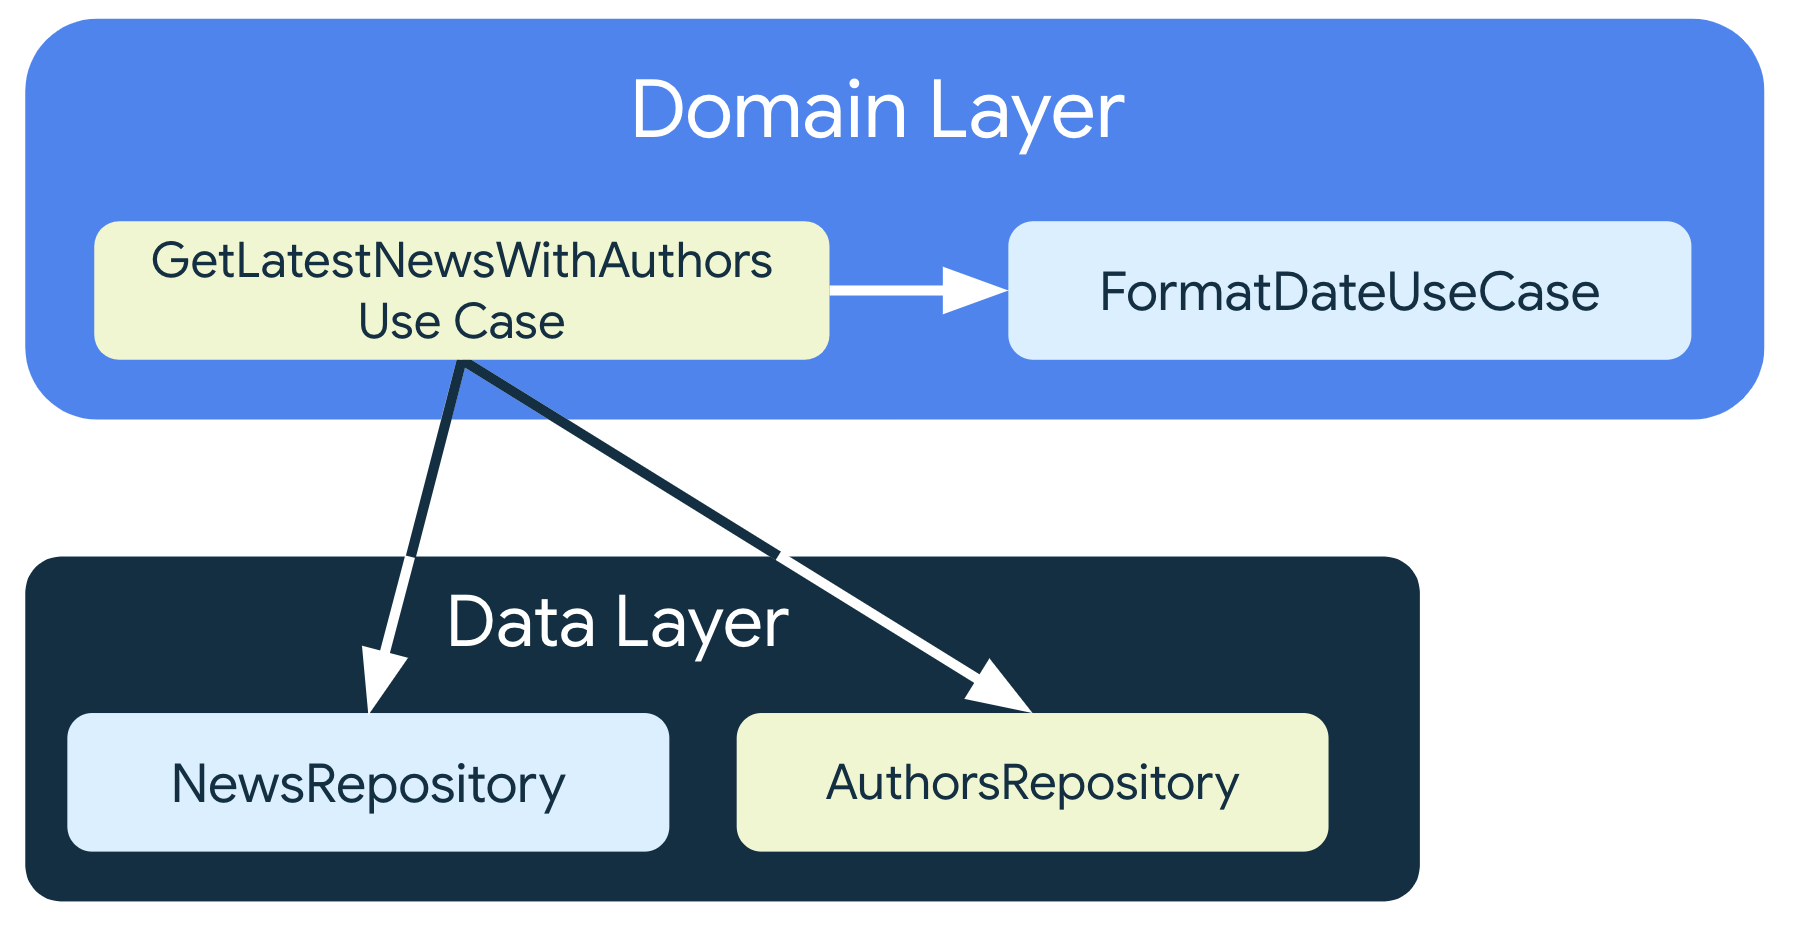 GetLatestNewsWithAuthorsUseCase 依赖于数据层中的仓库类，但它同时还依赖于同样位于网域层的另一个用例类 FormatDataUseCase。